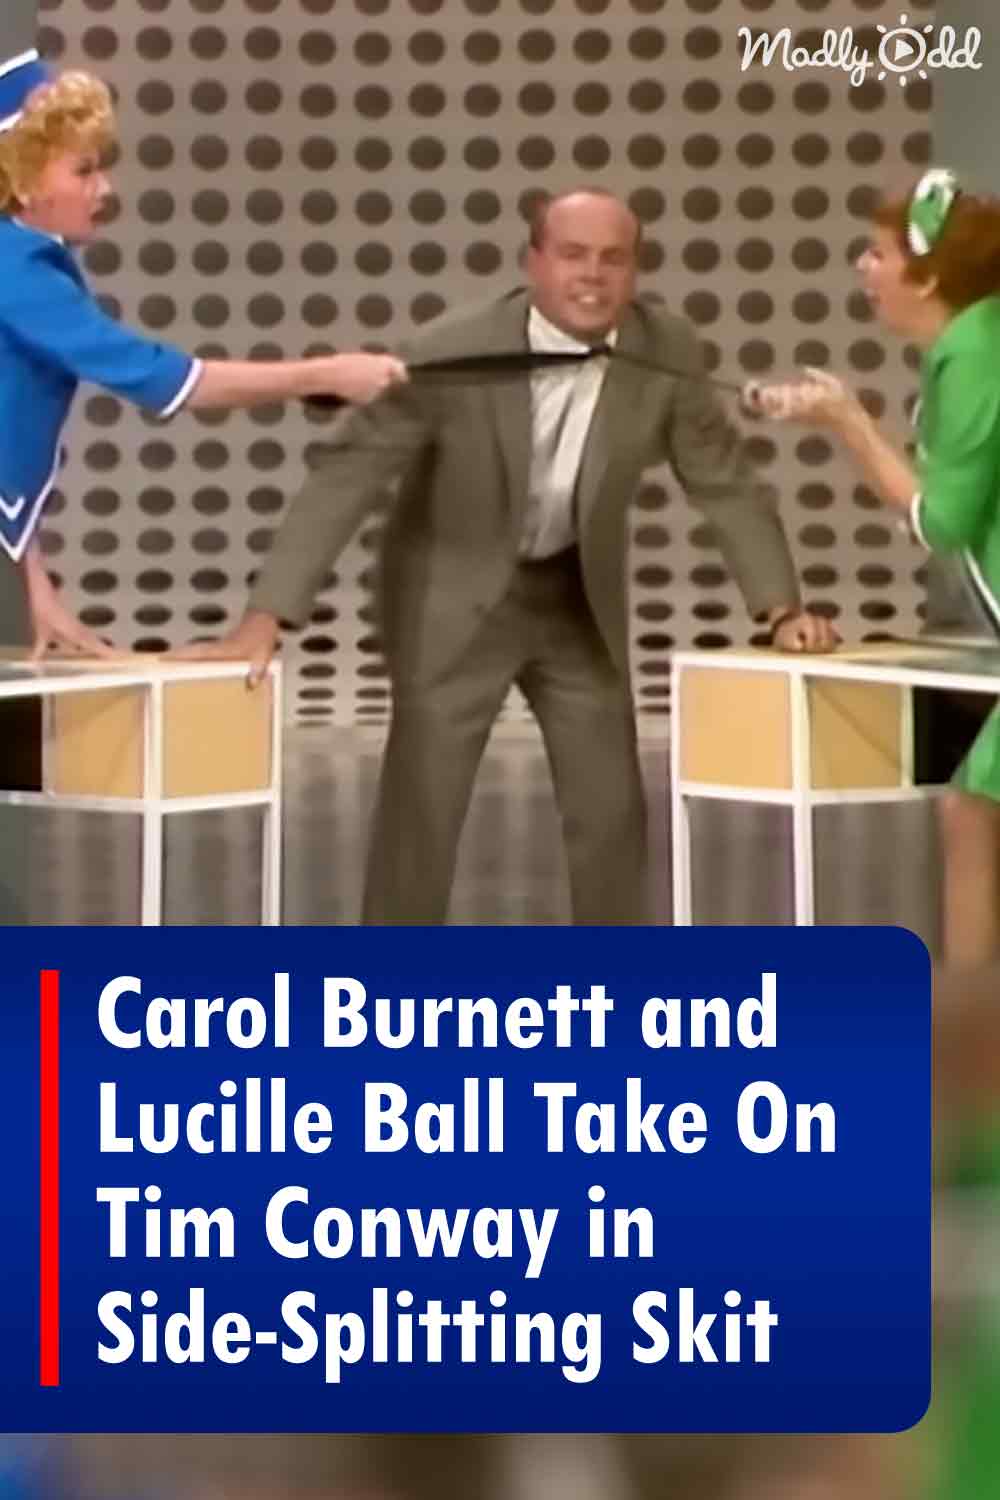 Carol Burnett and Lucille Ball Take On Tim Conway in Side-Splitting Skit